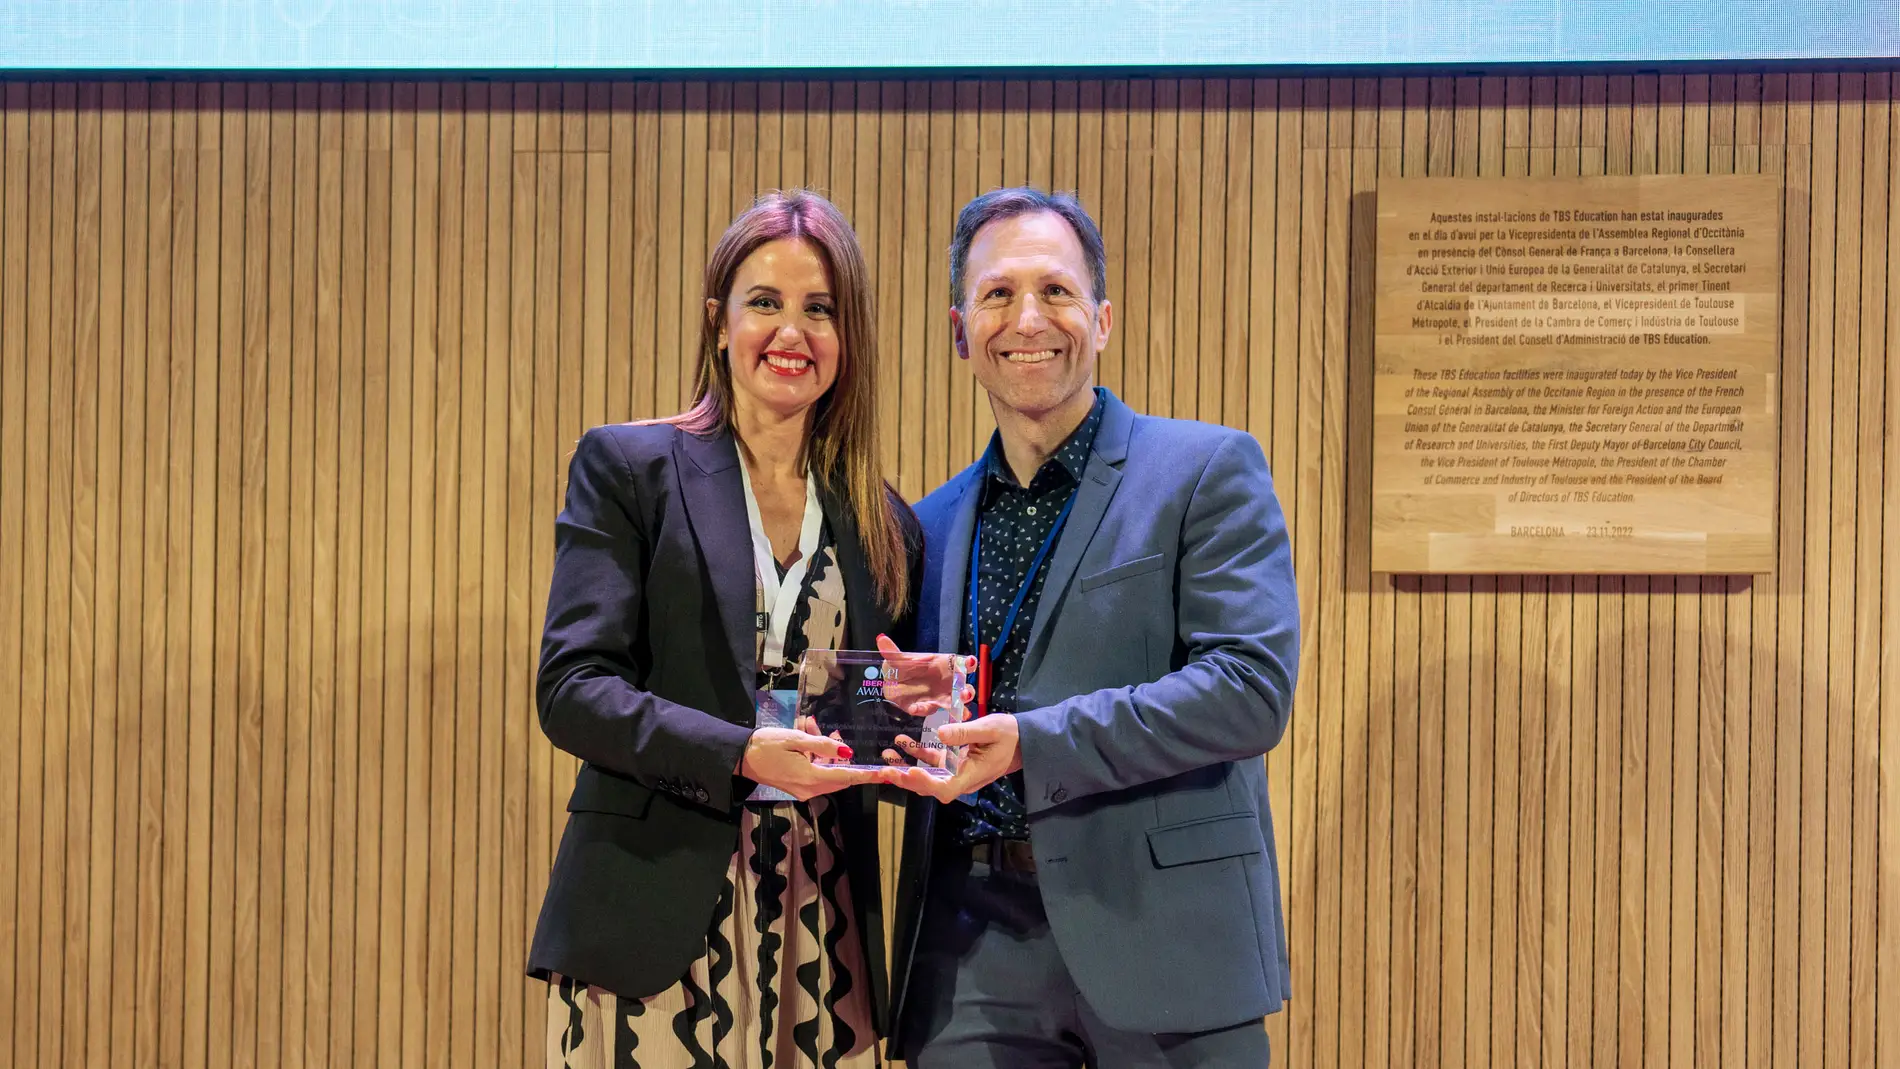 La ilicitana Esther Guilabert, recogiendo el premio de la MPI Iberian Chapter